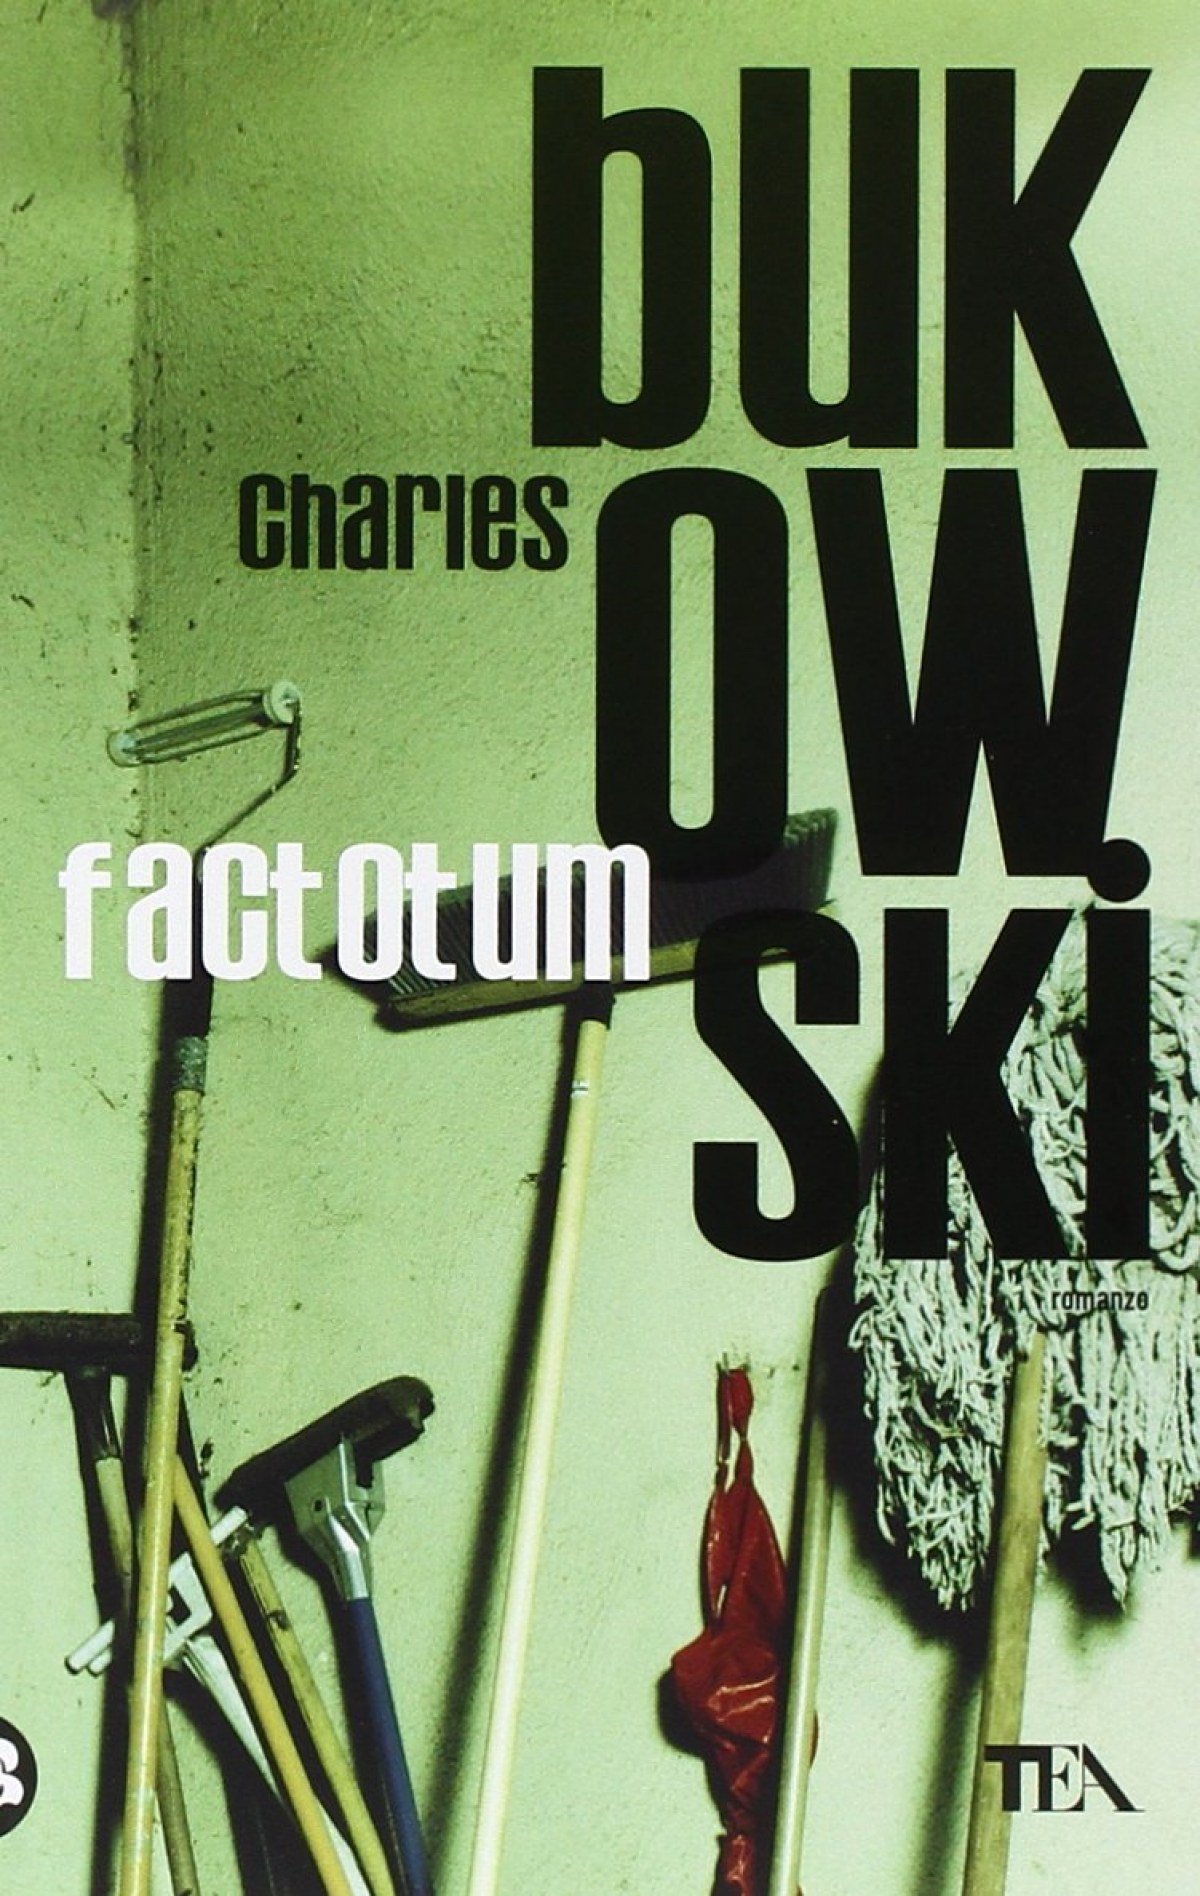 Factotum - Bukowski, Charles